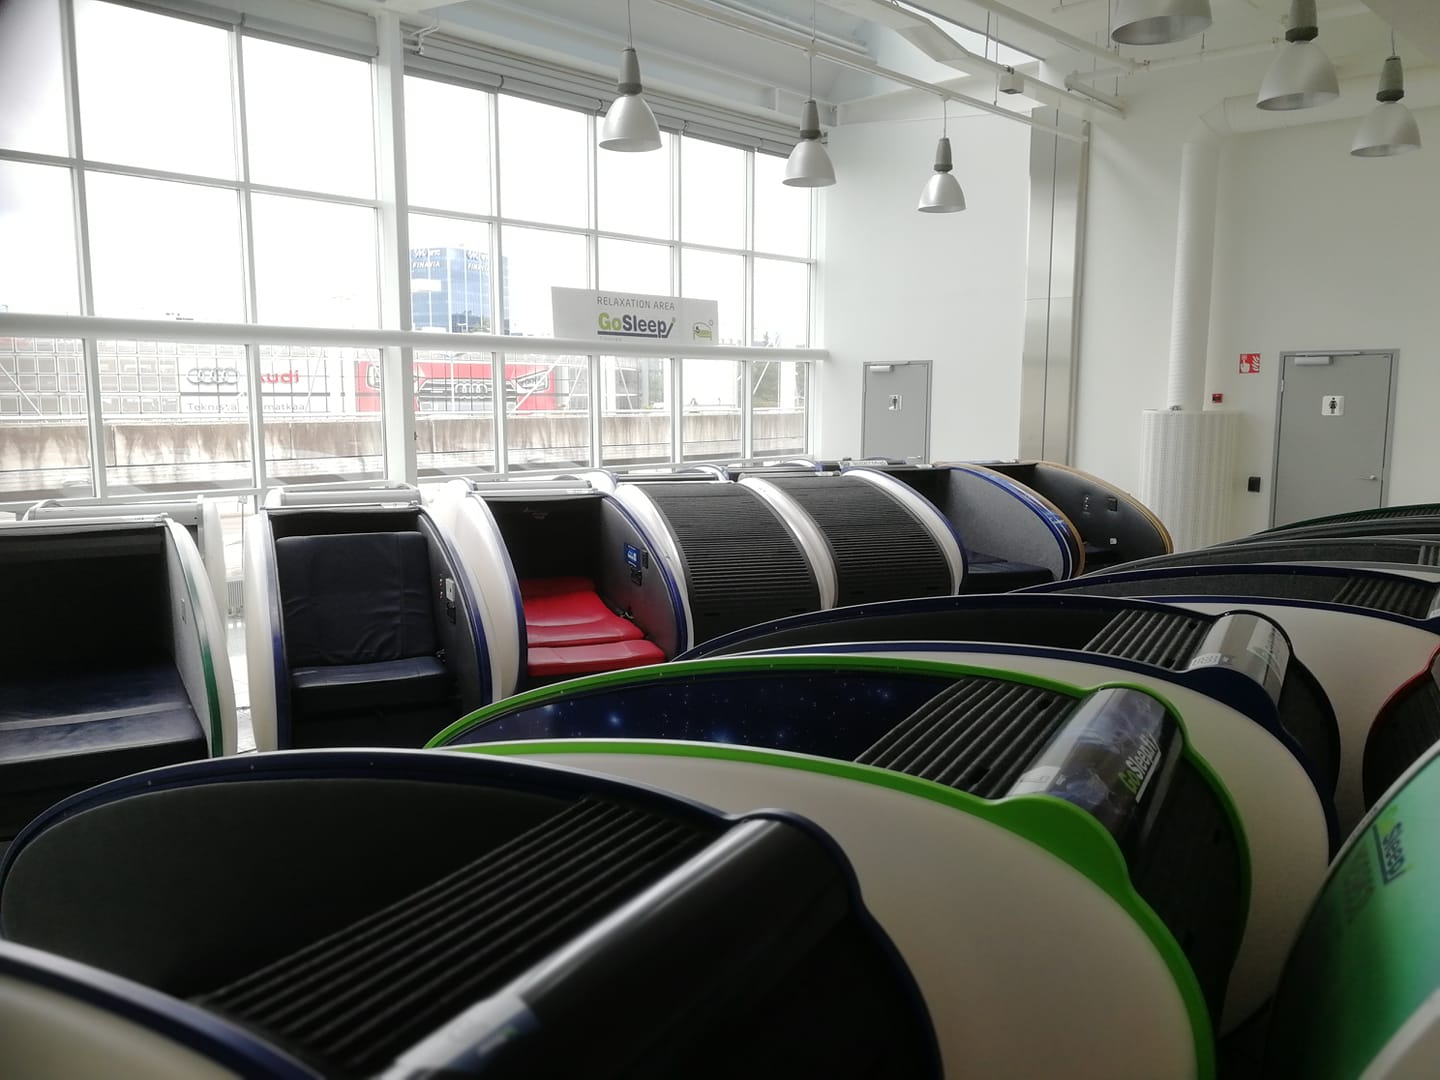 Sleeping pods at Helsinki Airport